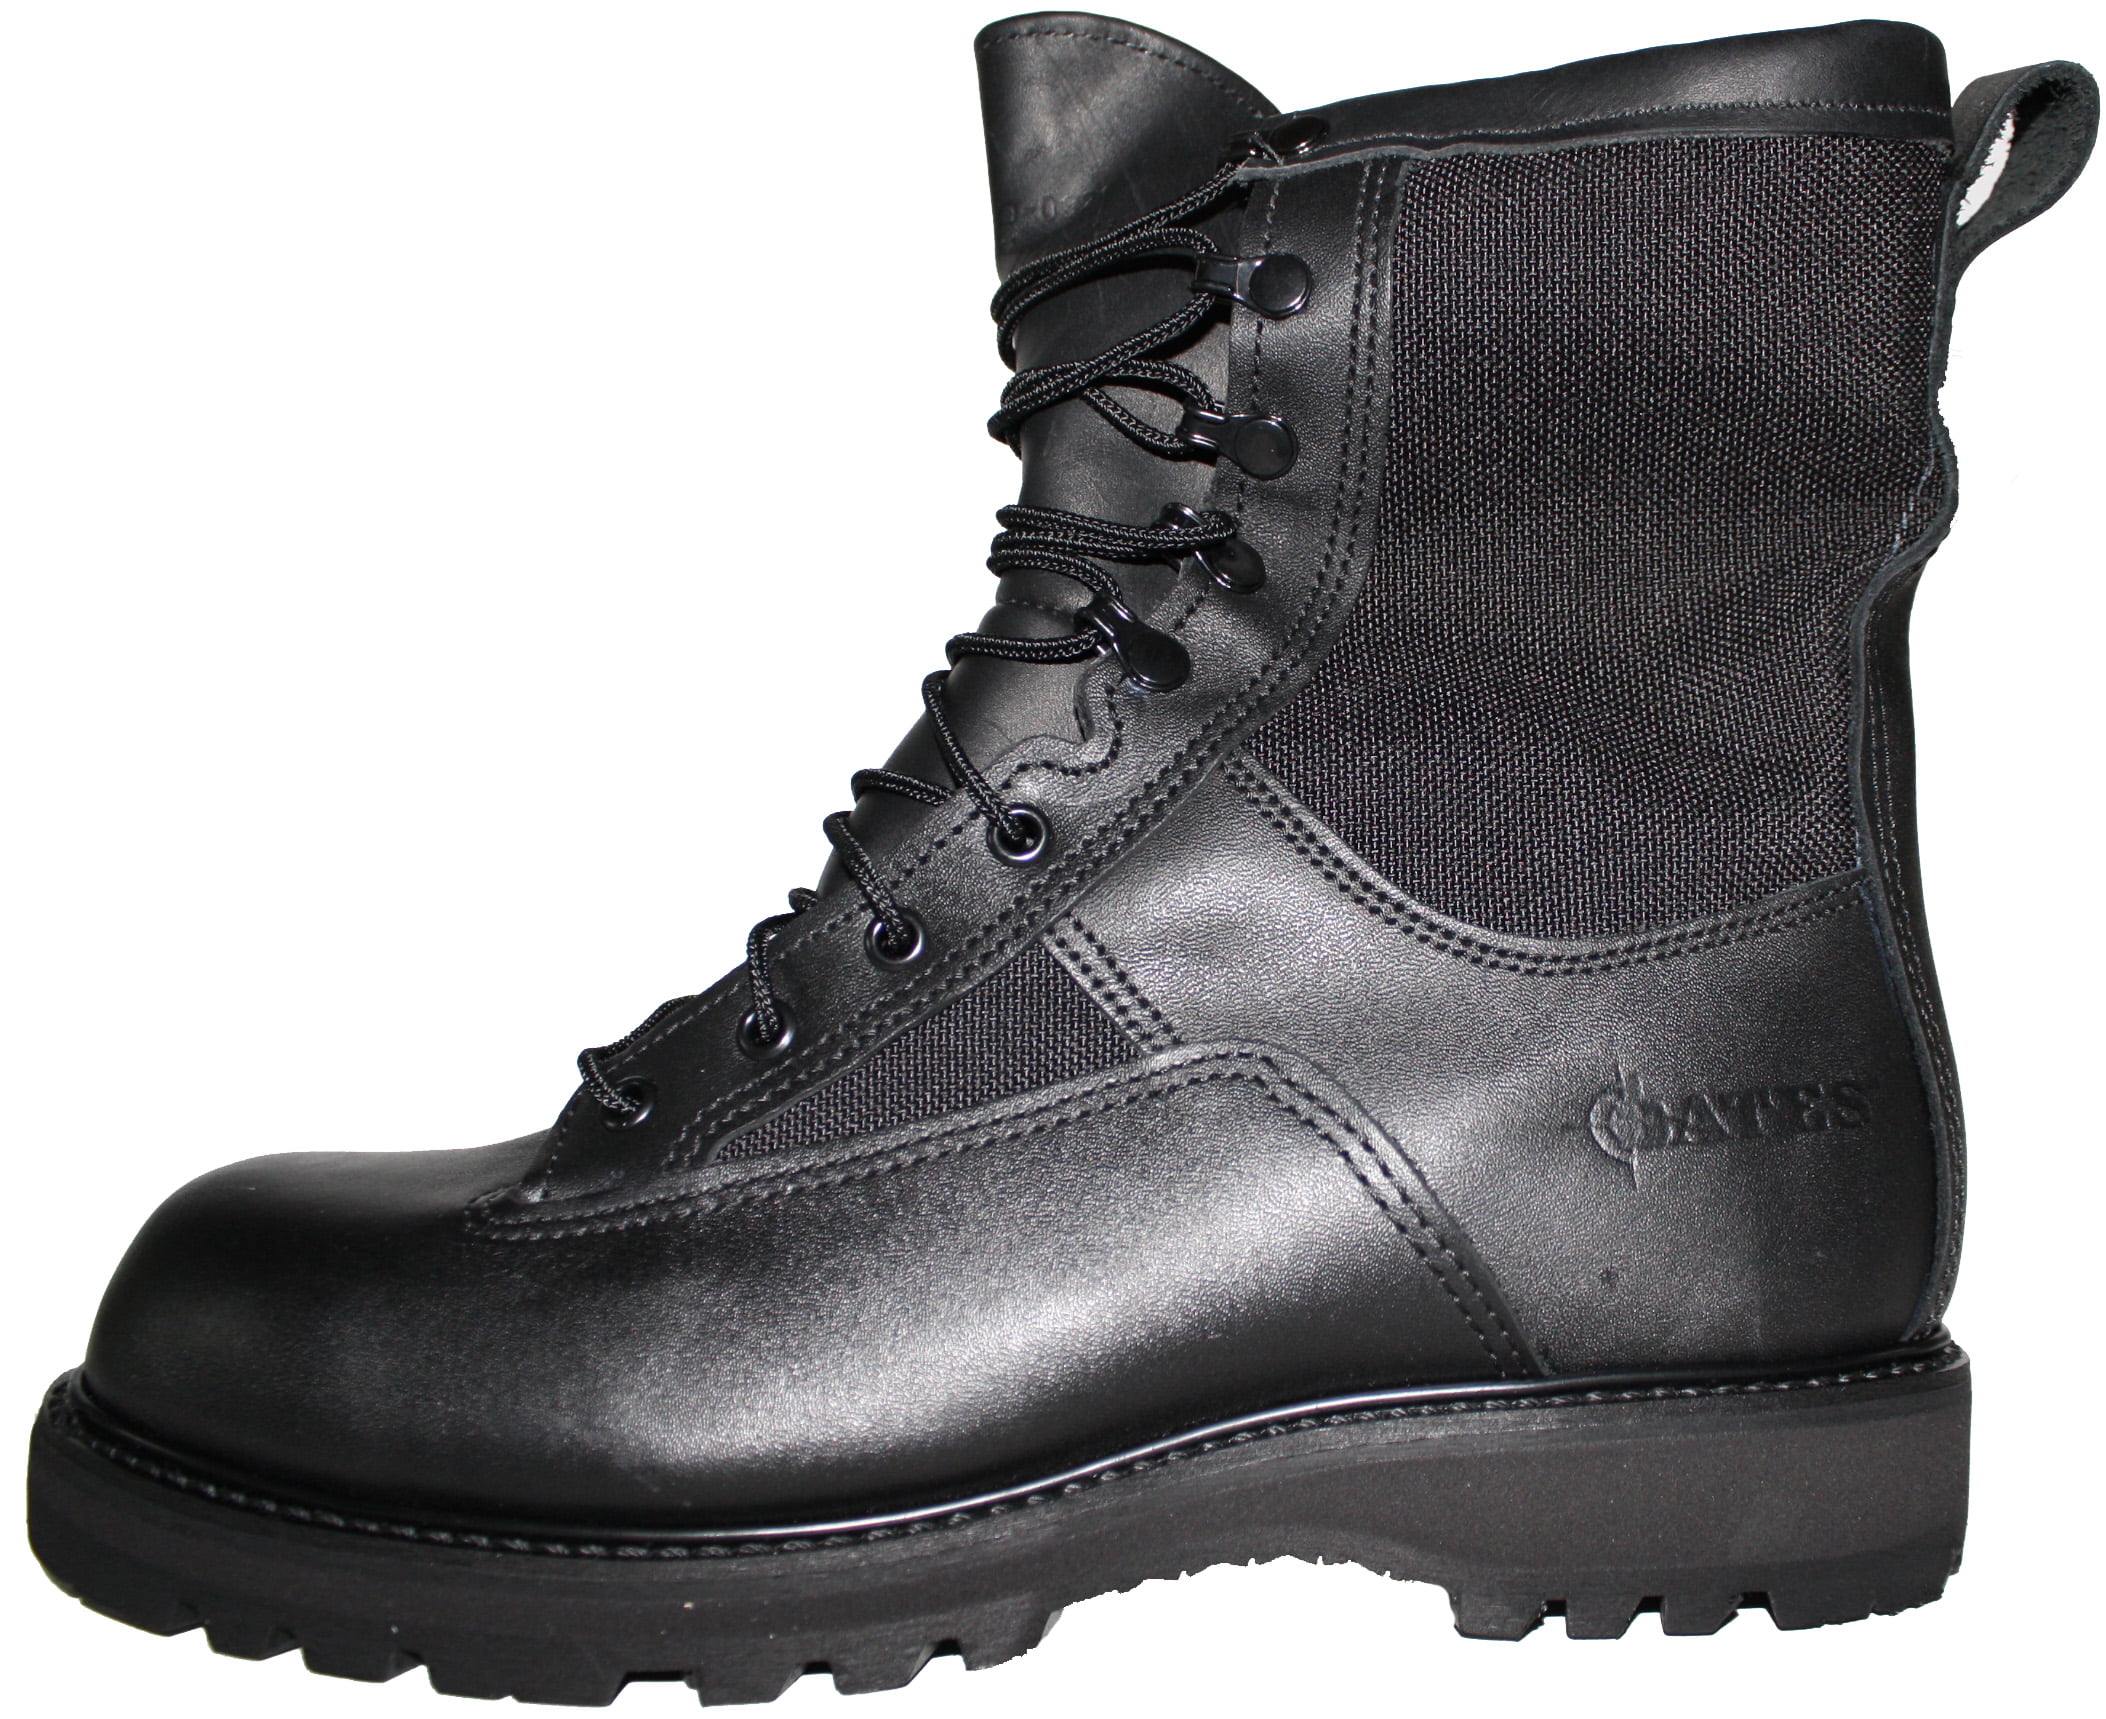 narrow waterproof boots